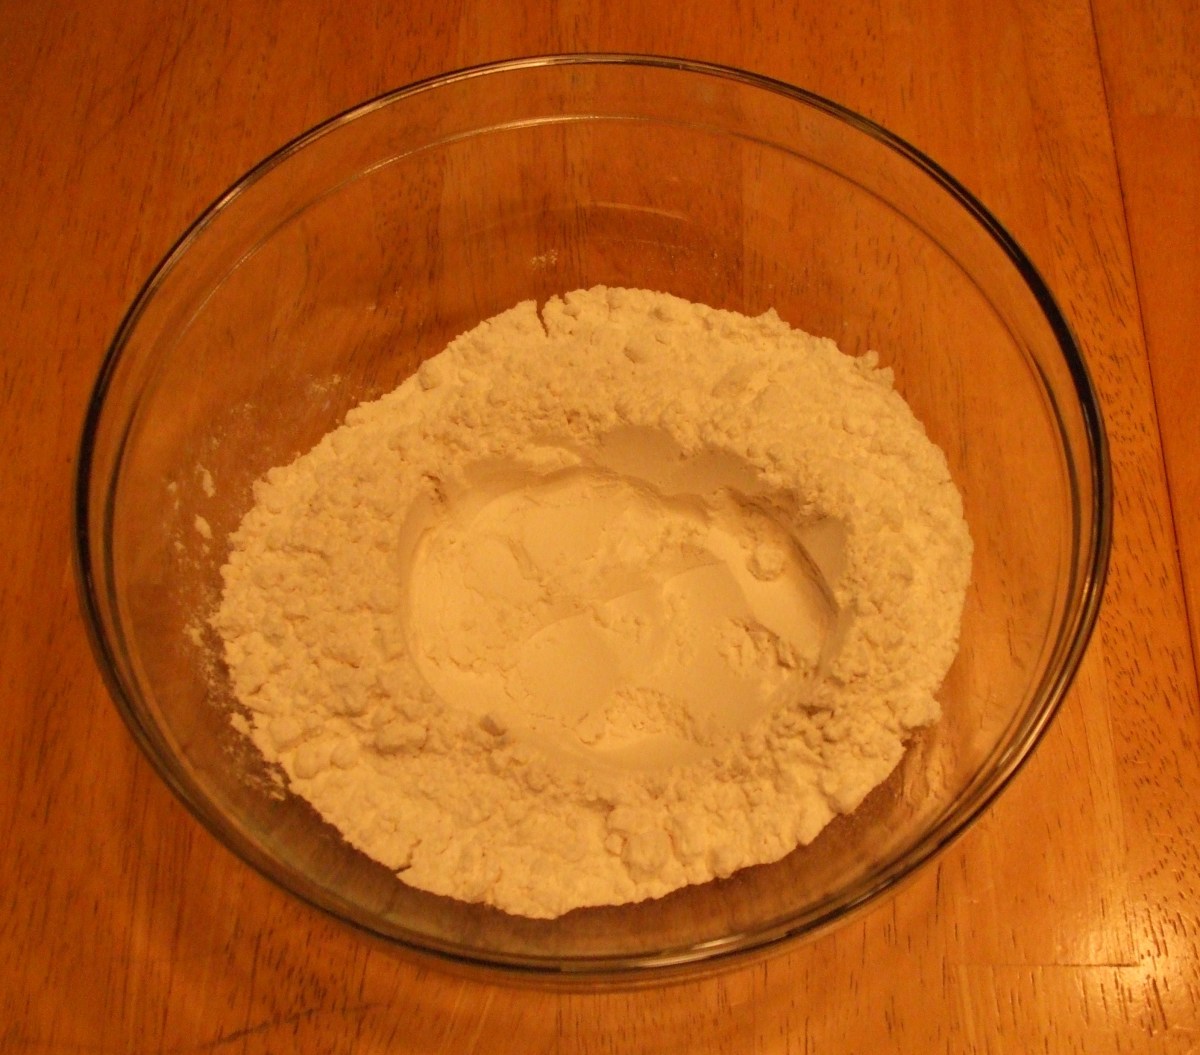 Mixed flour and salt